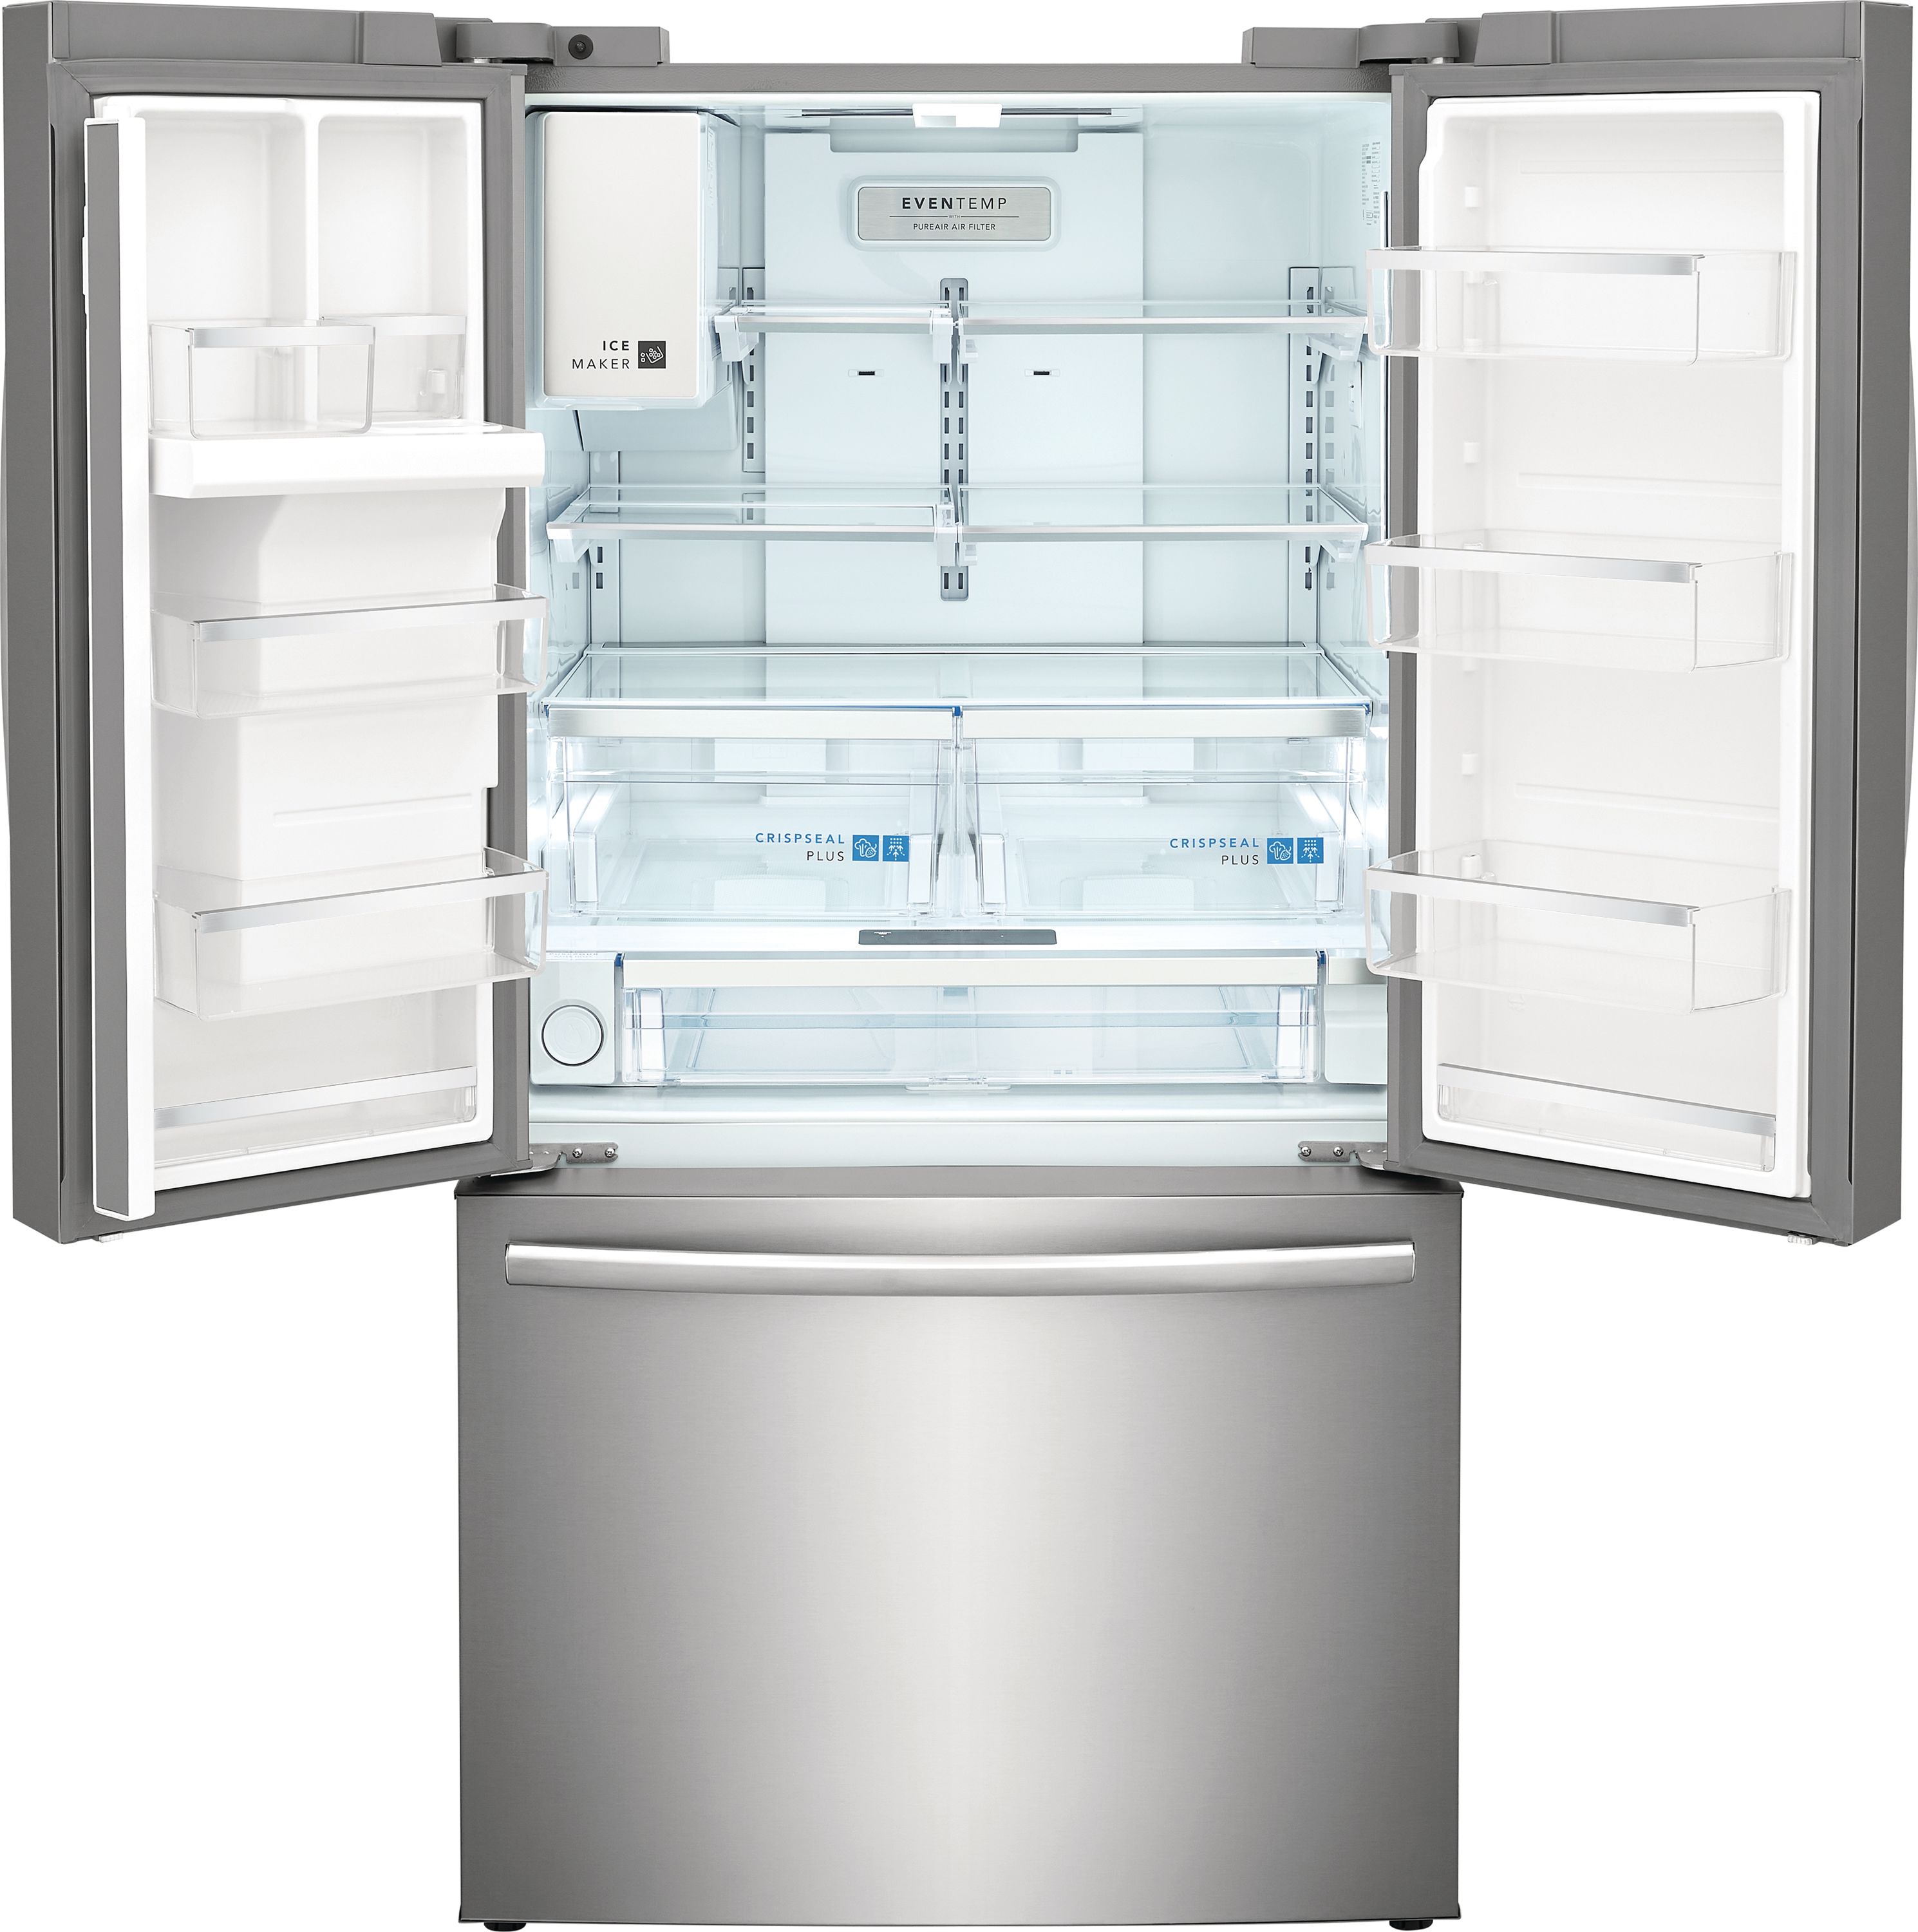 Igloo Double Door Refrigerator With Freezer - Black, 1 ct - Fred Meyer